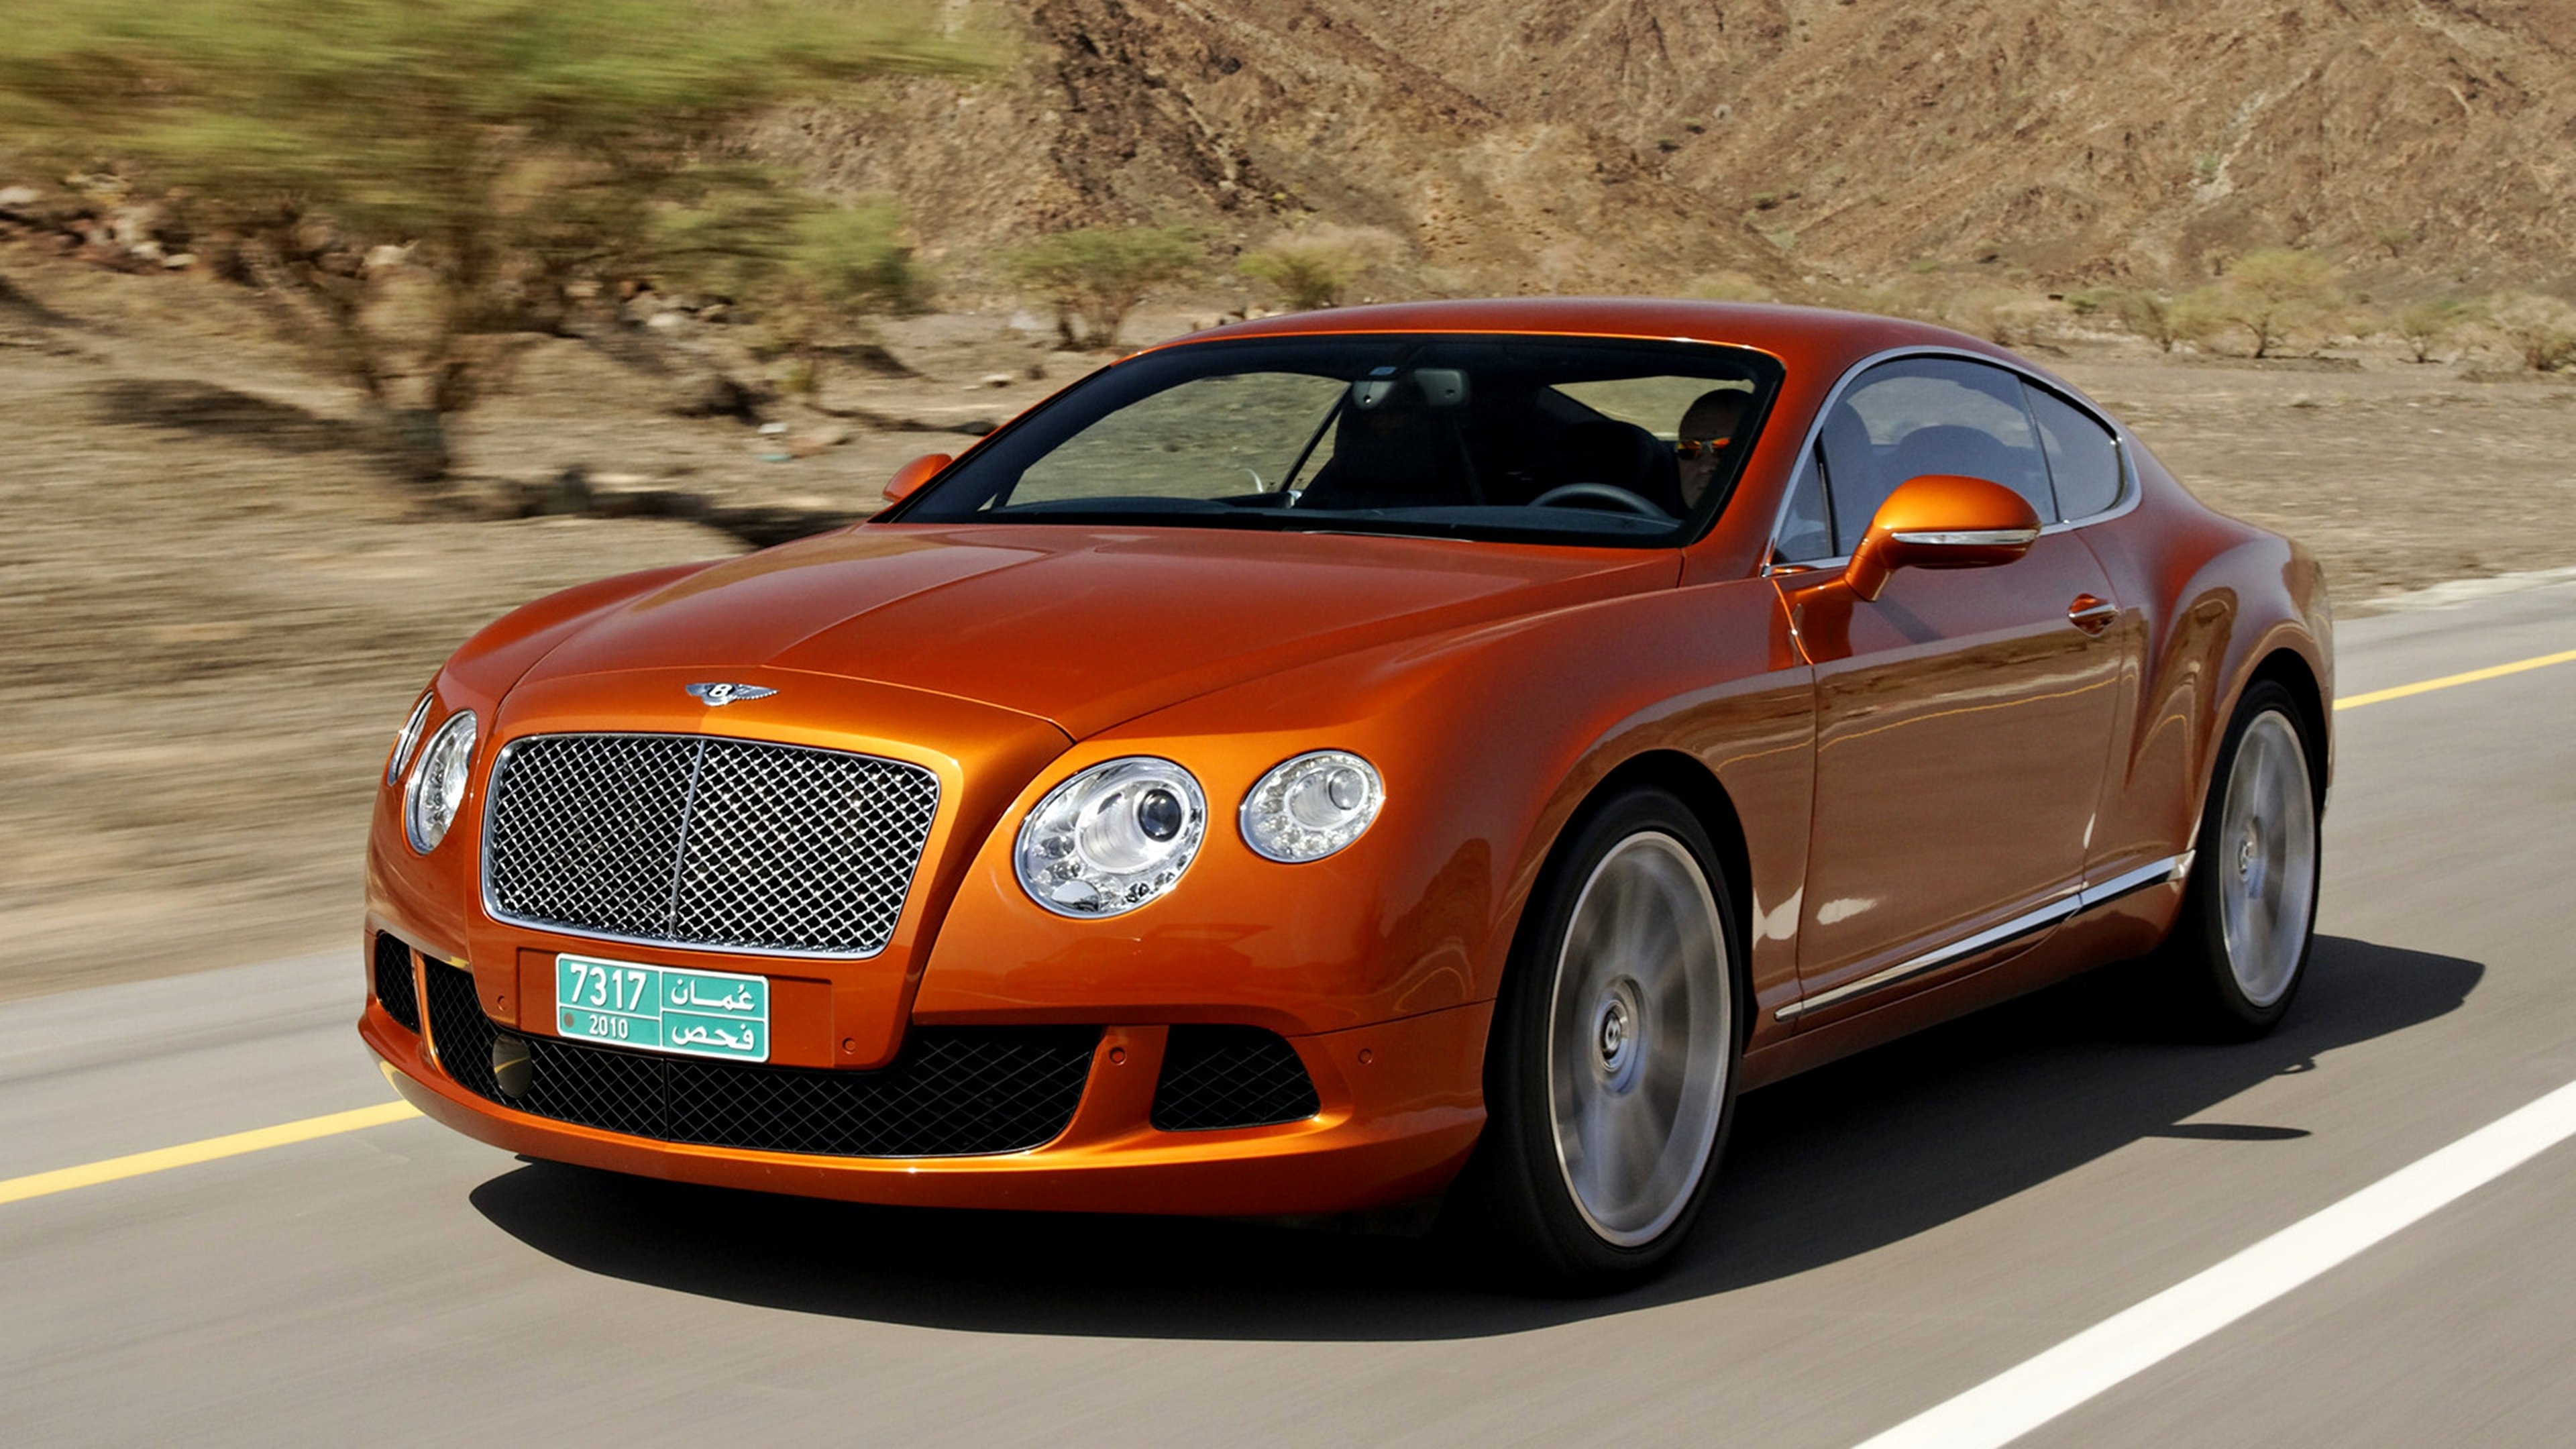 Bentley Continental GT (Auto), Desert GT landscape, Luxury car experience, Speed and power, 3840x2160 4K Desktop